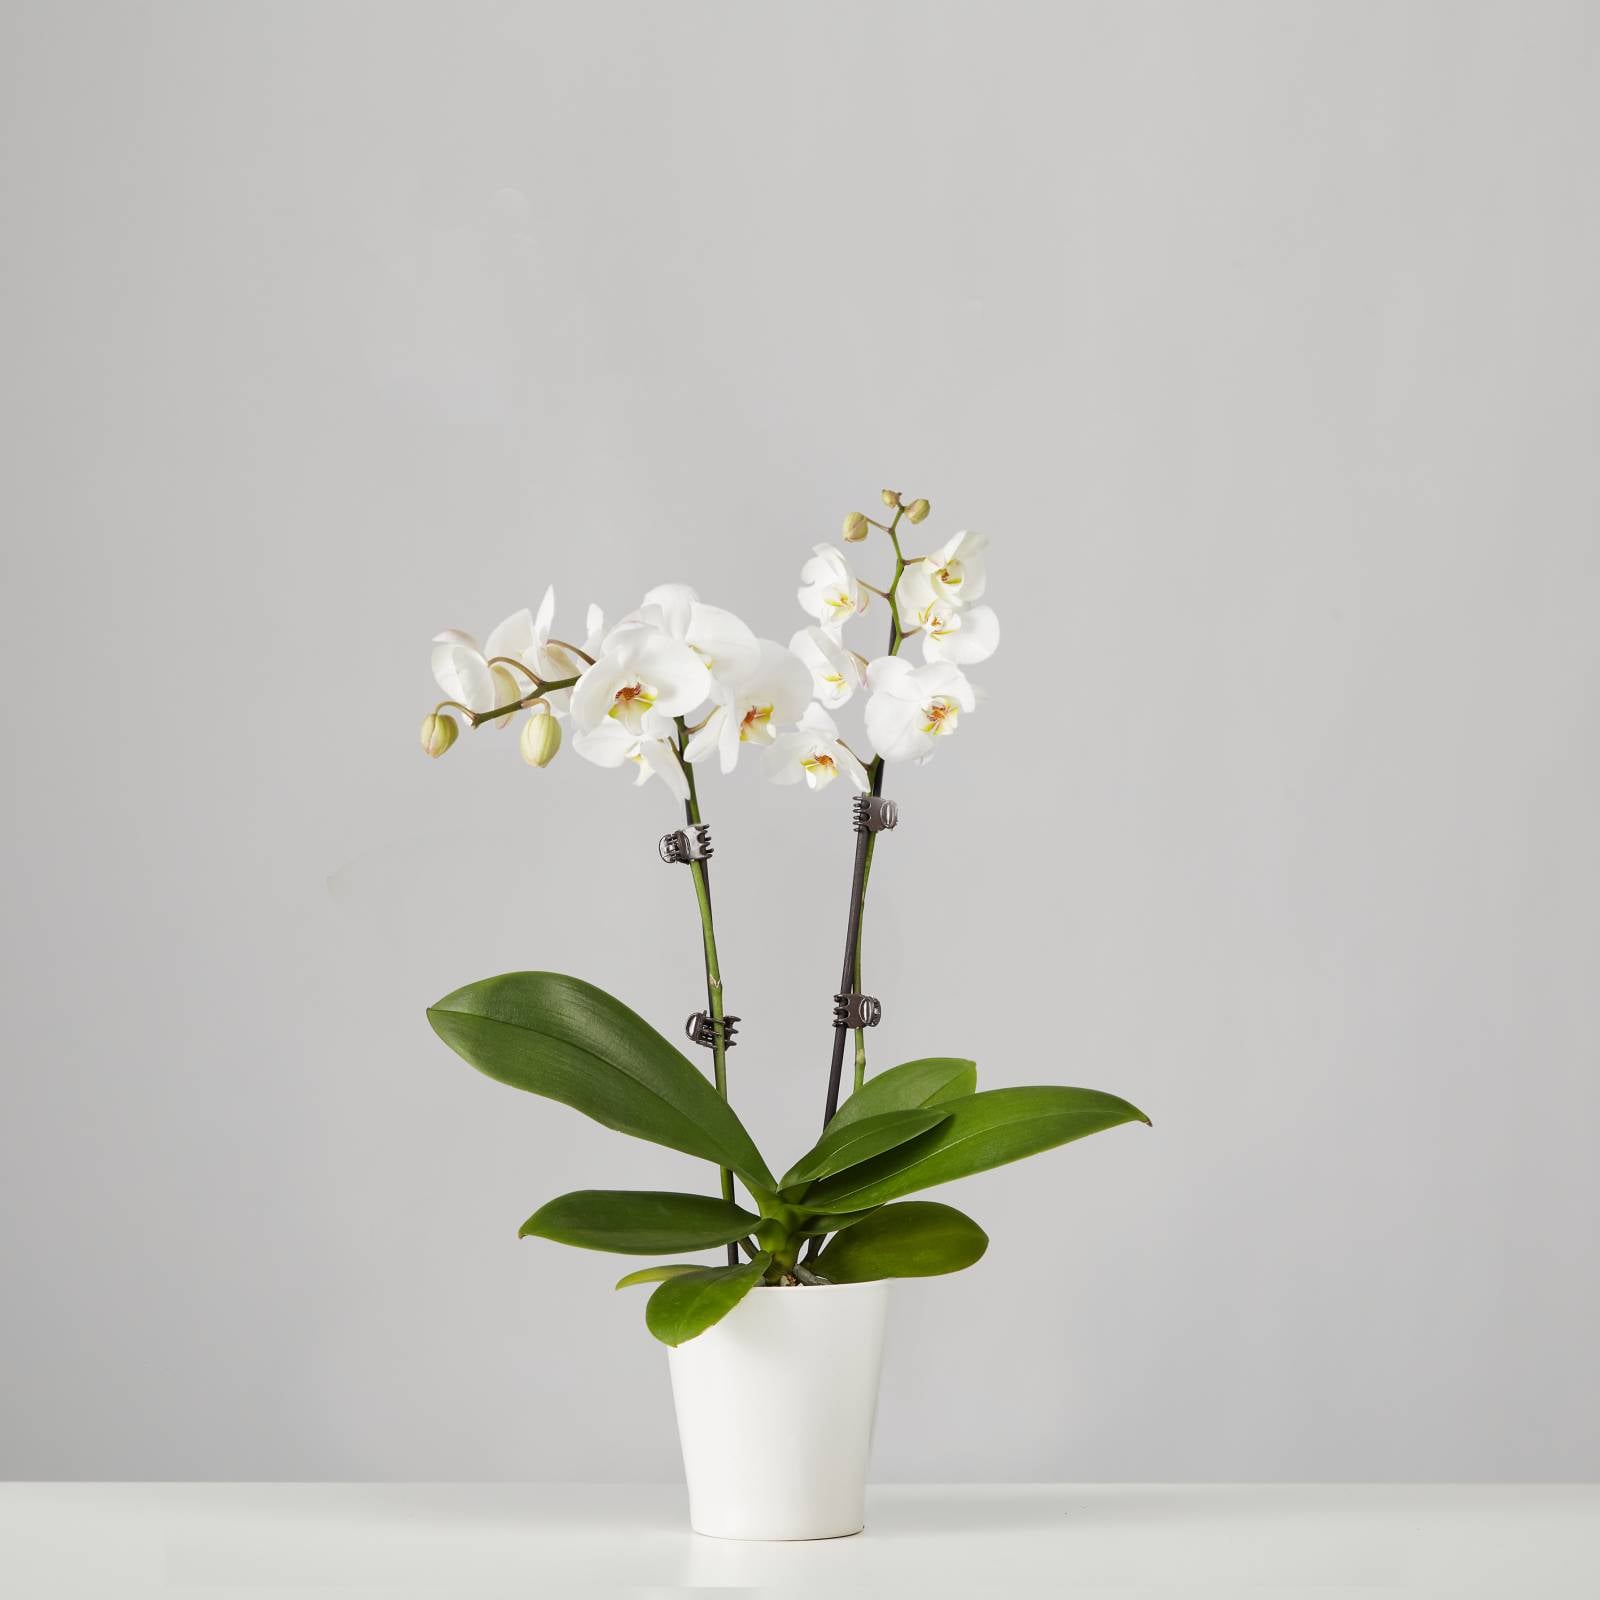 Flowering Houseplants, Shop Online, Delivered To You